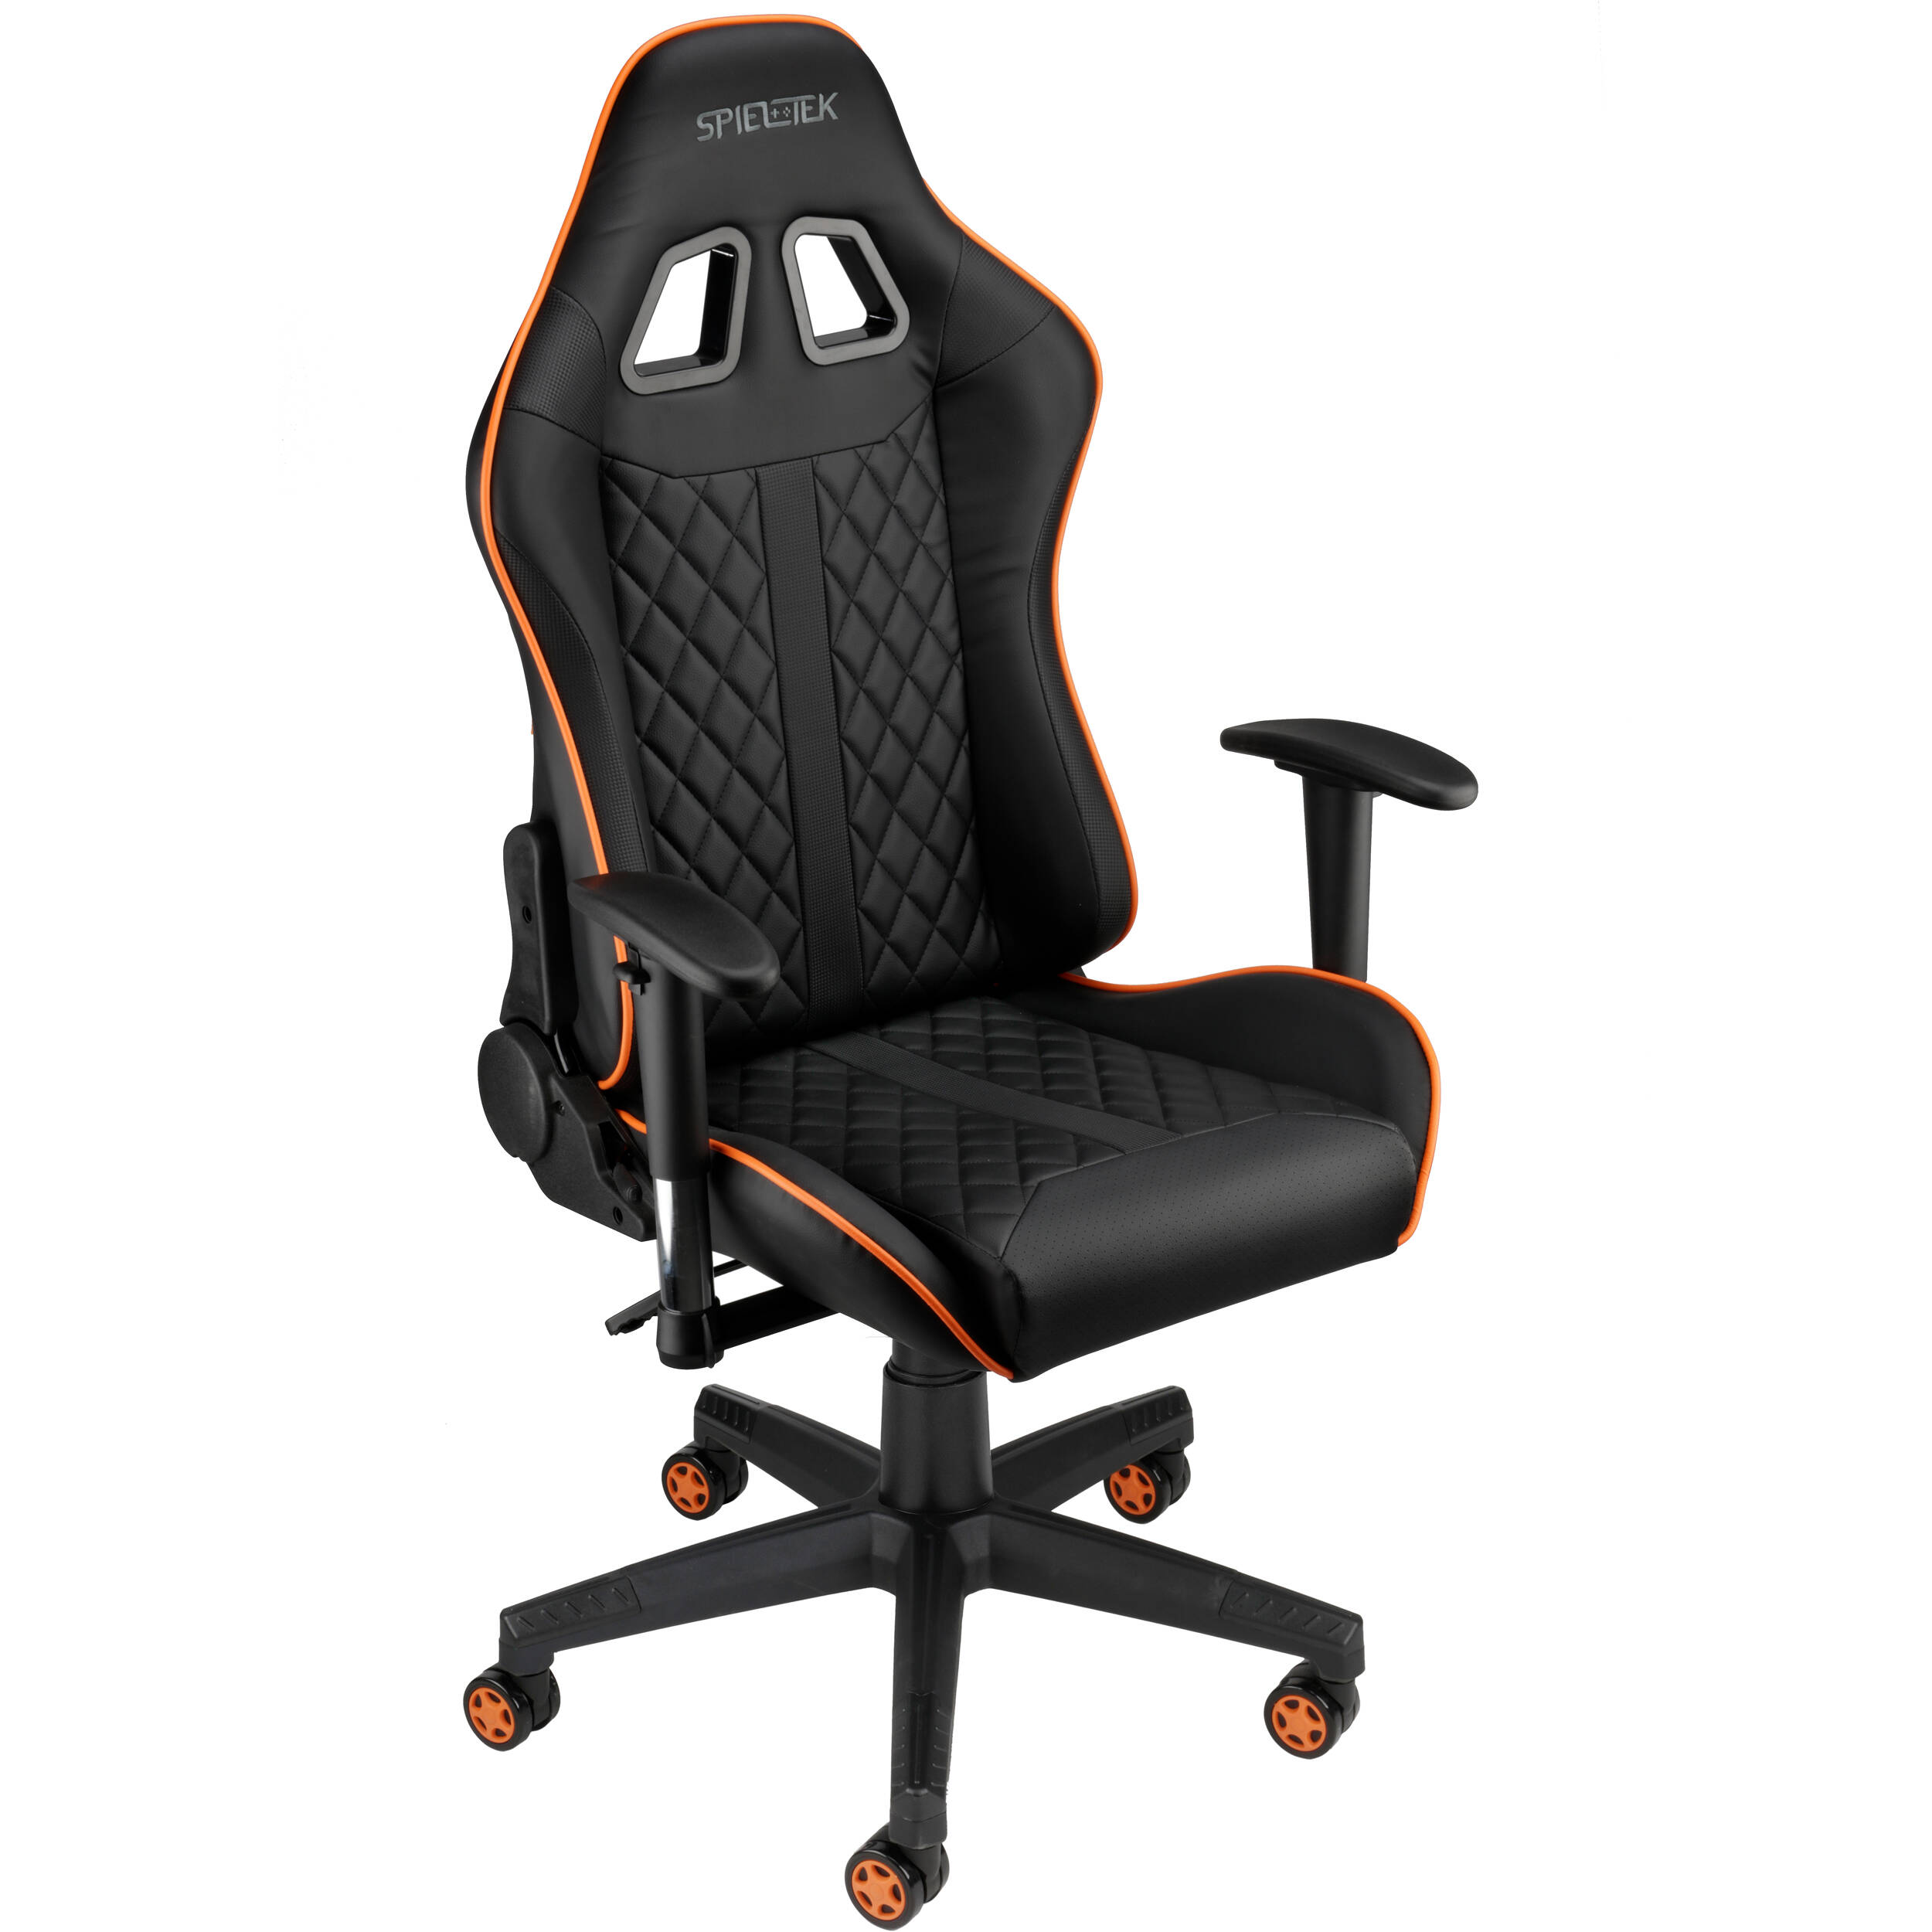 Spieltek 100 Series Gaming Chair Black Orange Gc 100l Bo B H